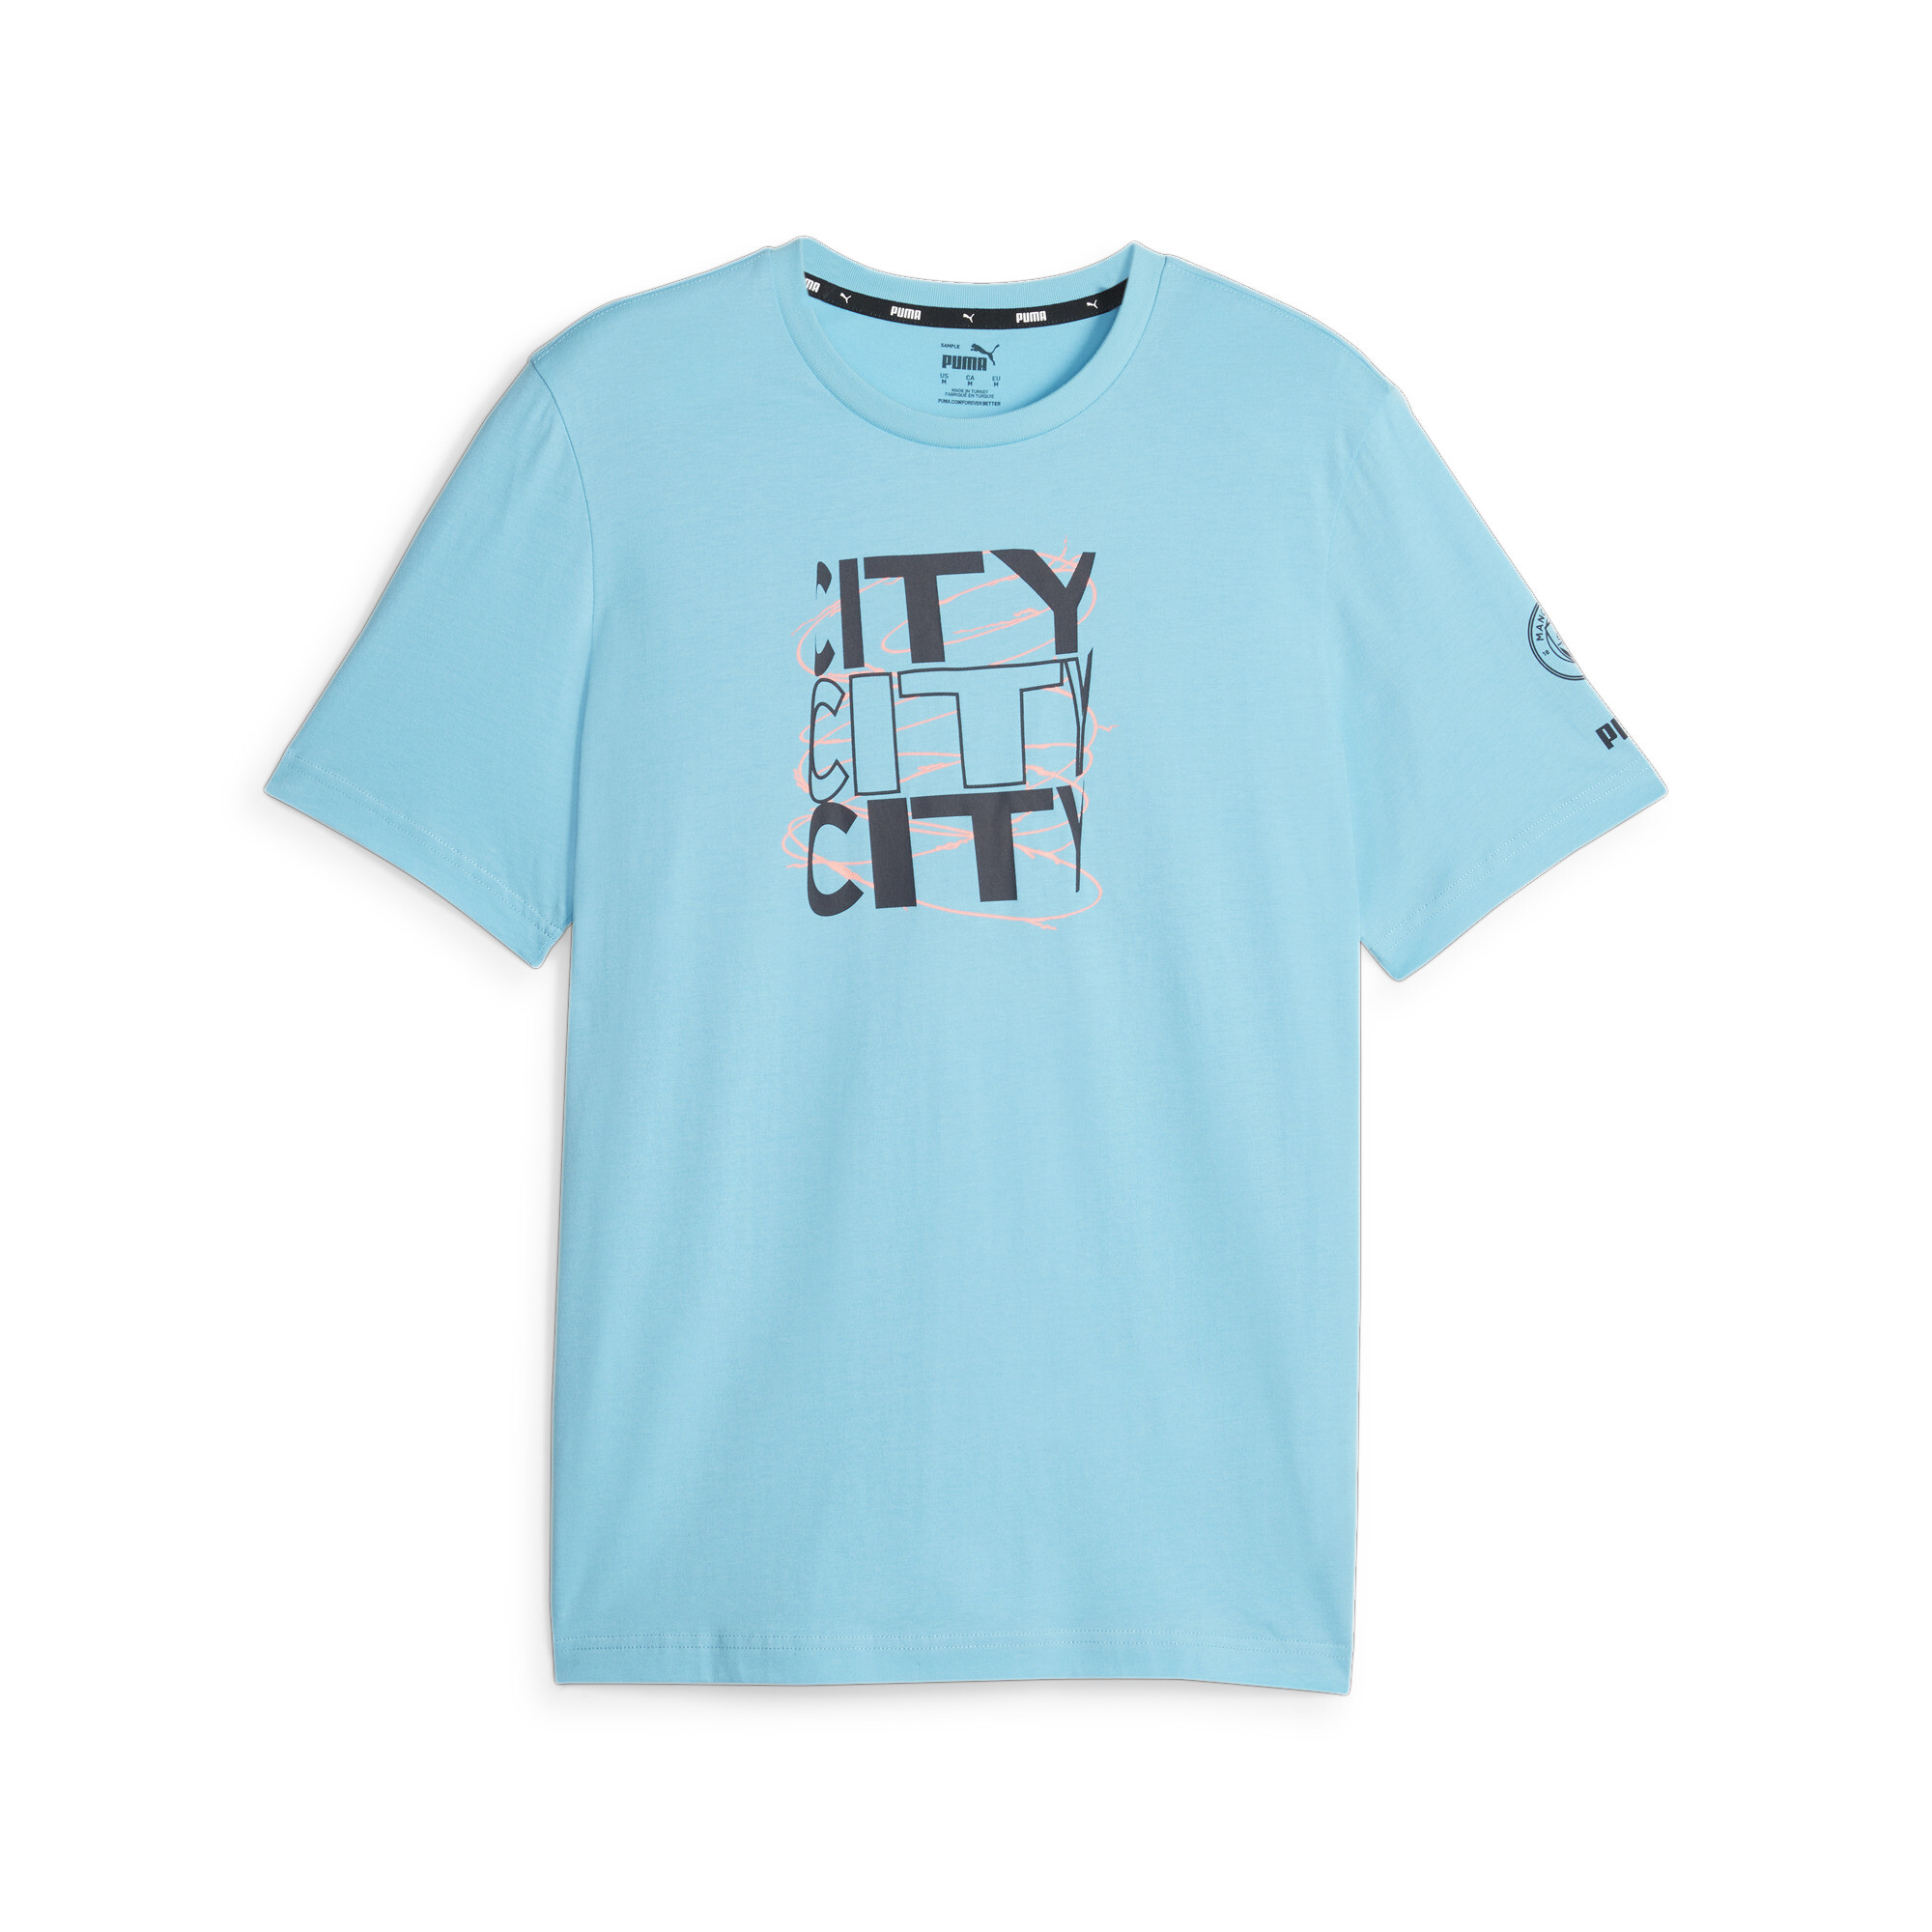 Men's PUMA Manchester City FtblCore Graphic T-Shirt In Blue, Size Medium